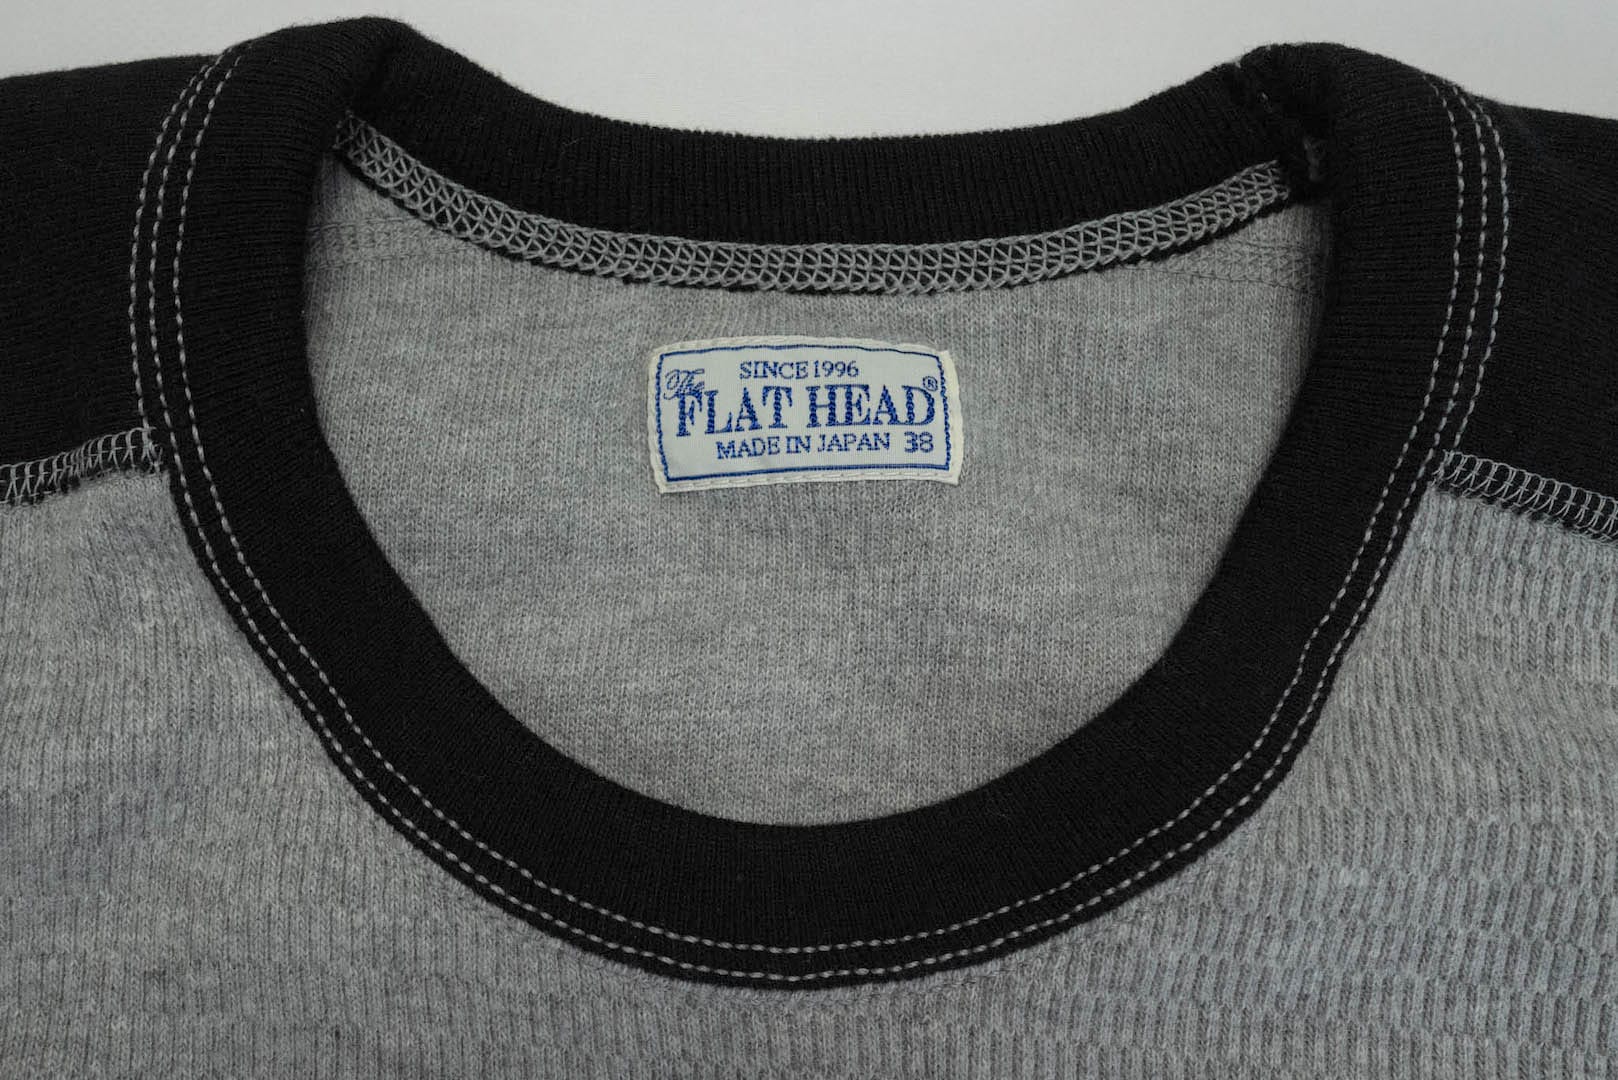 The Flat Head "Panneled" L/S Thermal Shirt (Grey X Black)